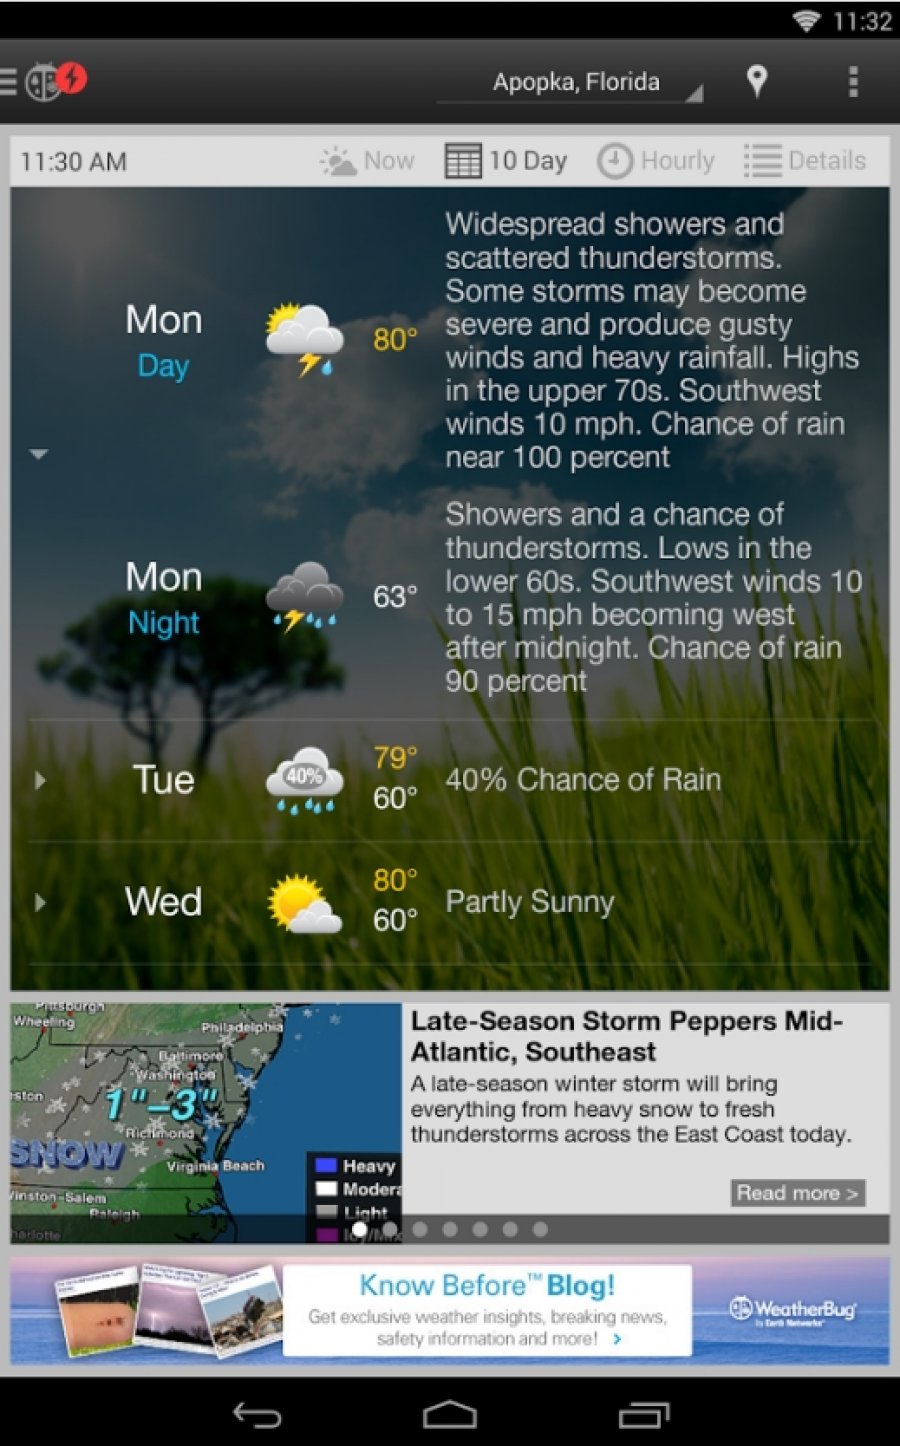 weatherbug weather app android